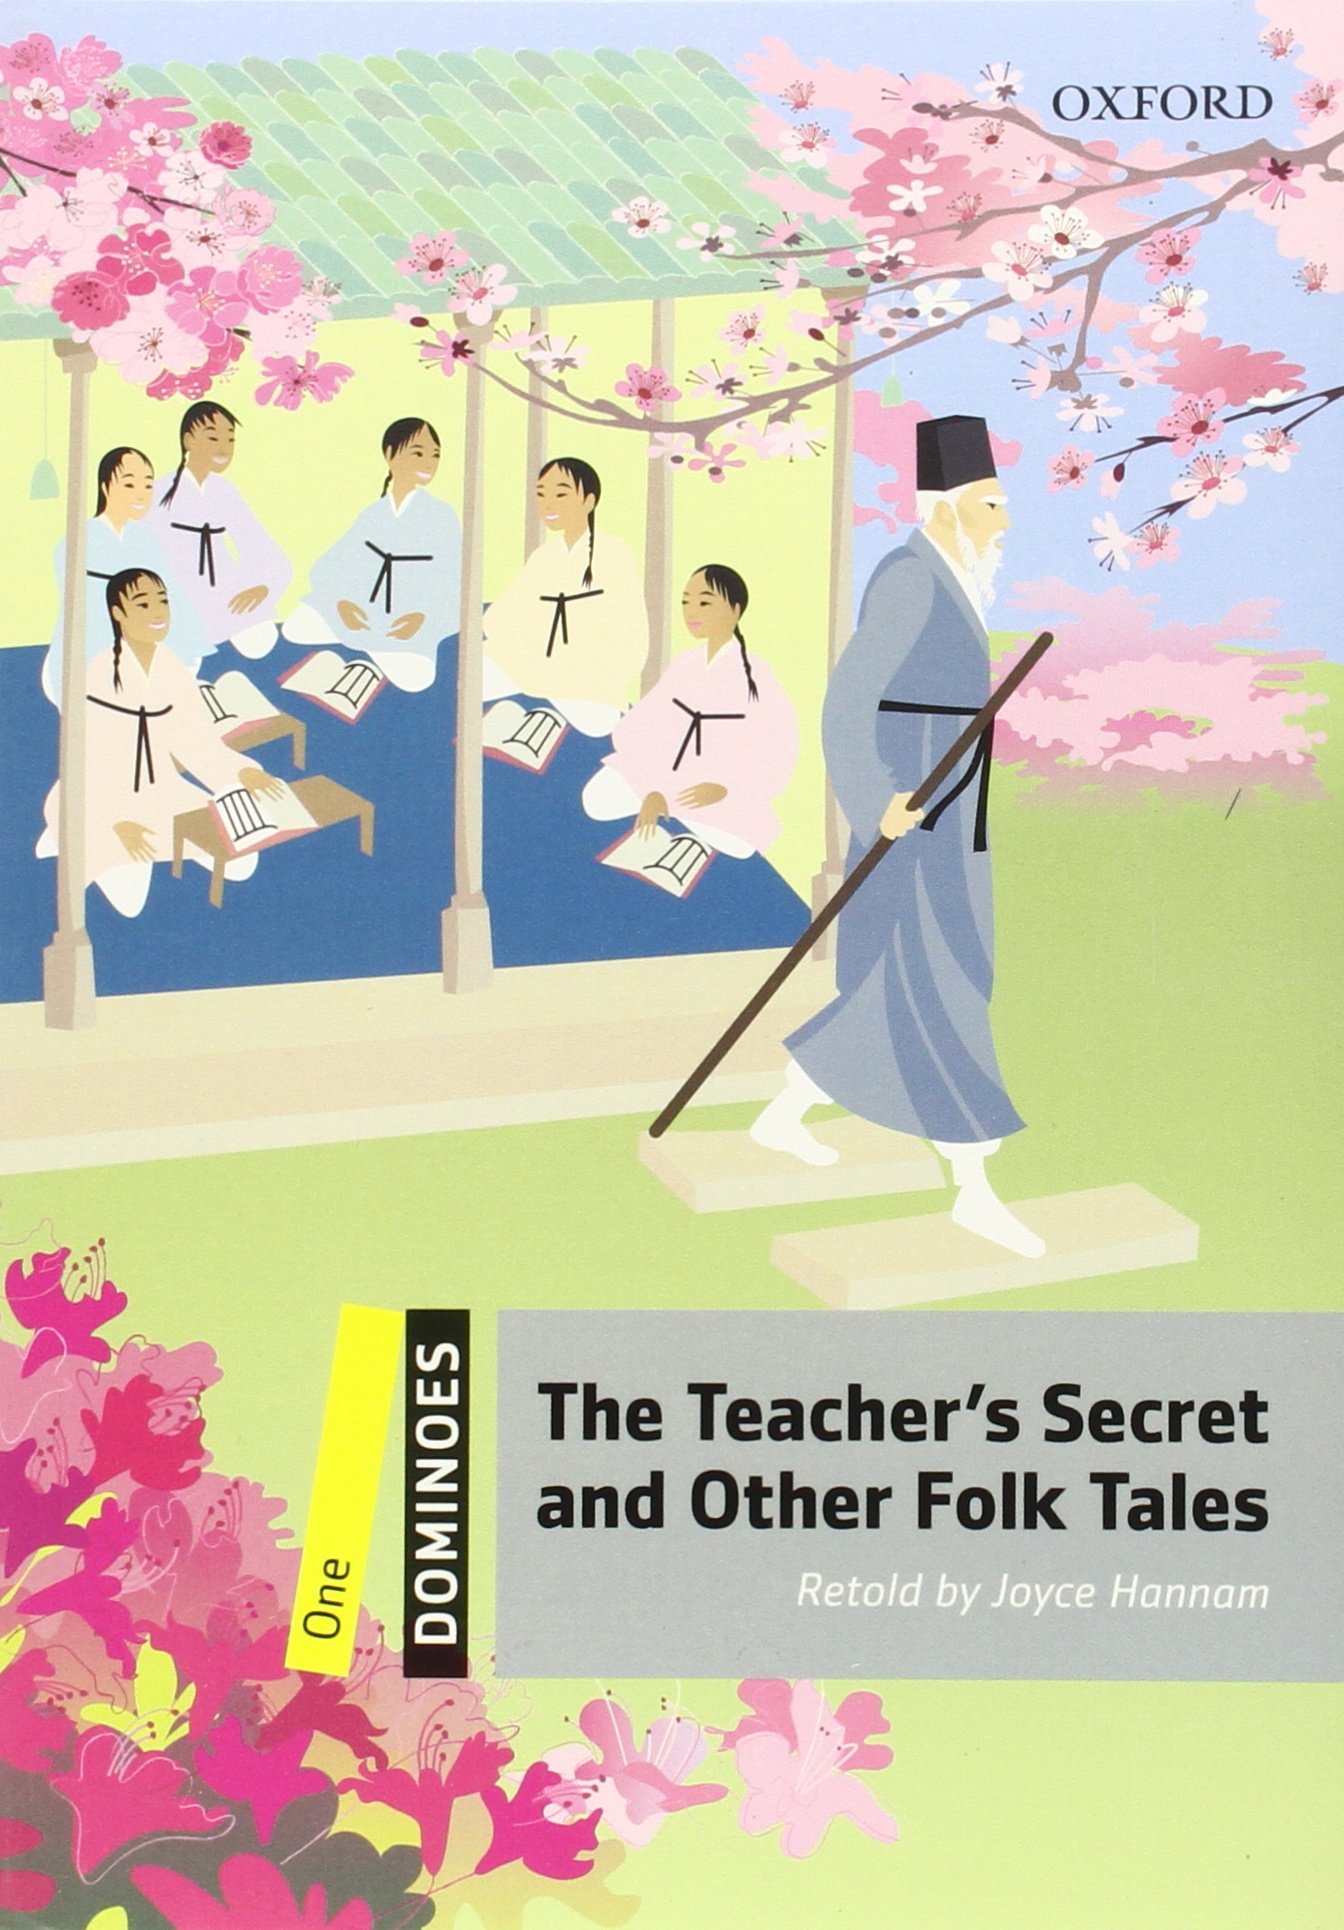 The Teacher's Secret and Other Folk Tales